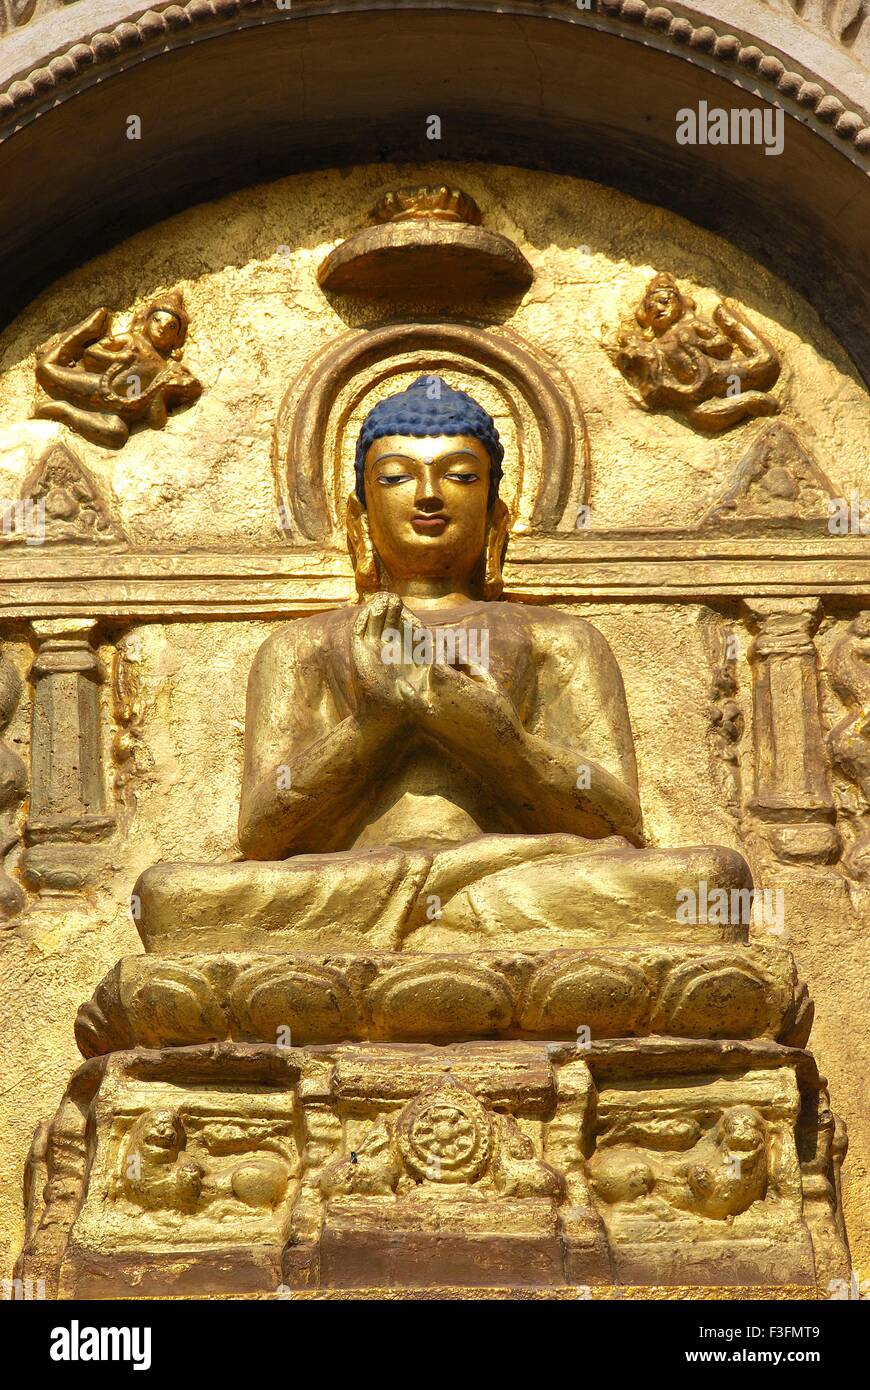 Bouddha statue en or dans la posture de méditation ; Gaya Bihar ; Inde ; Banque D'Images